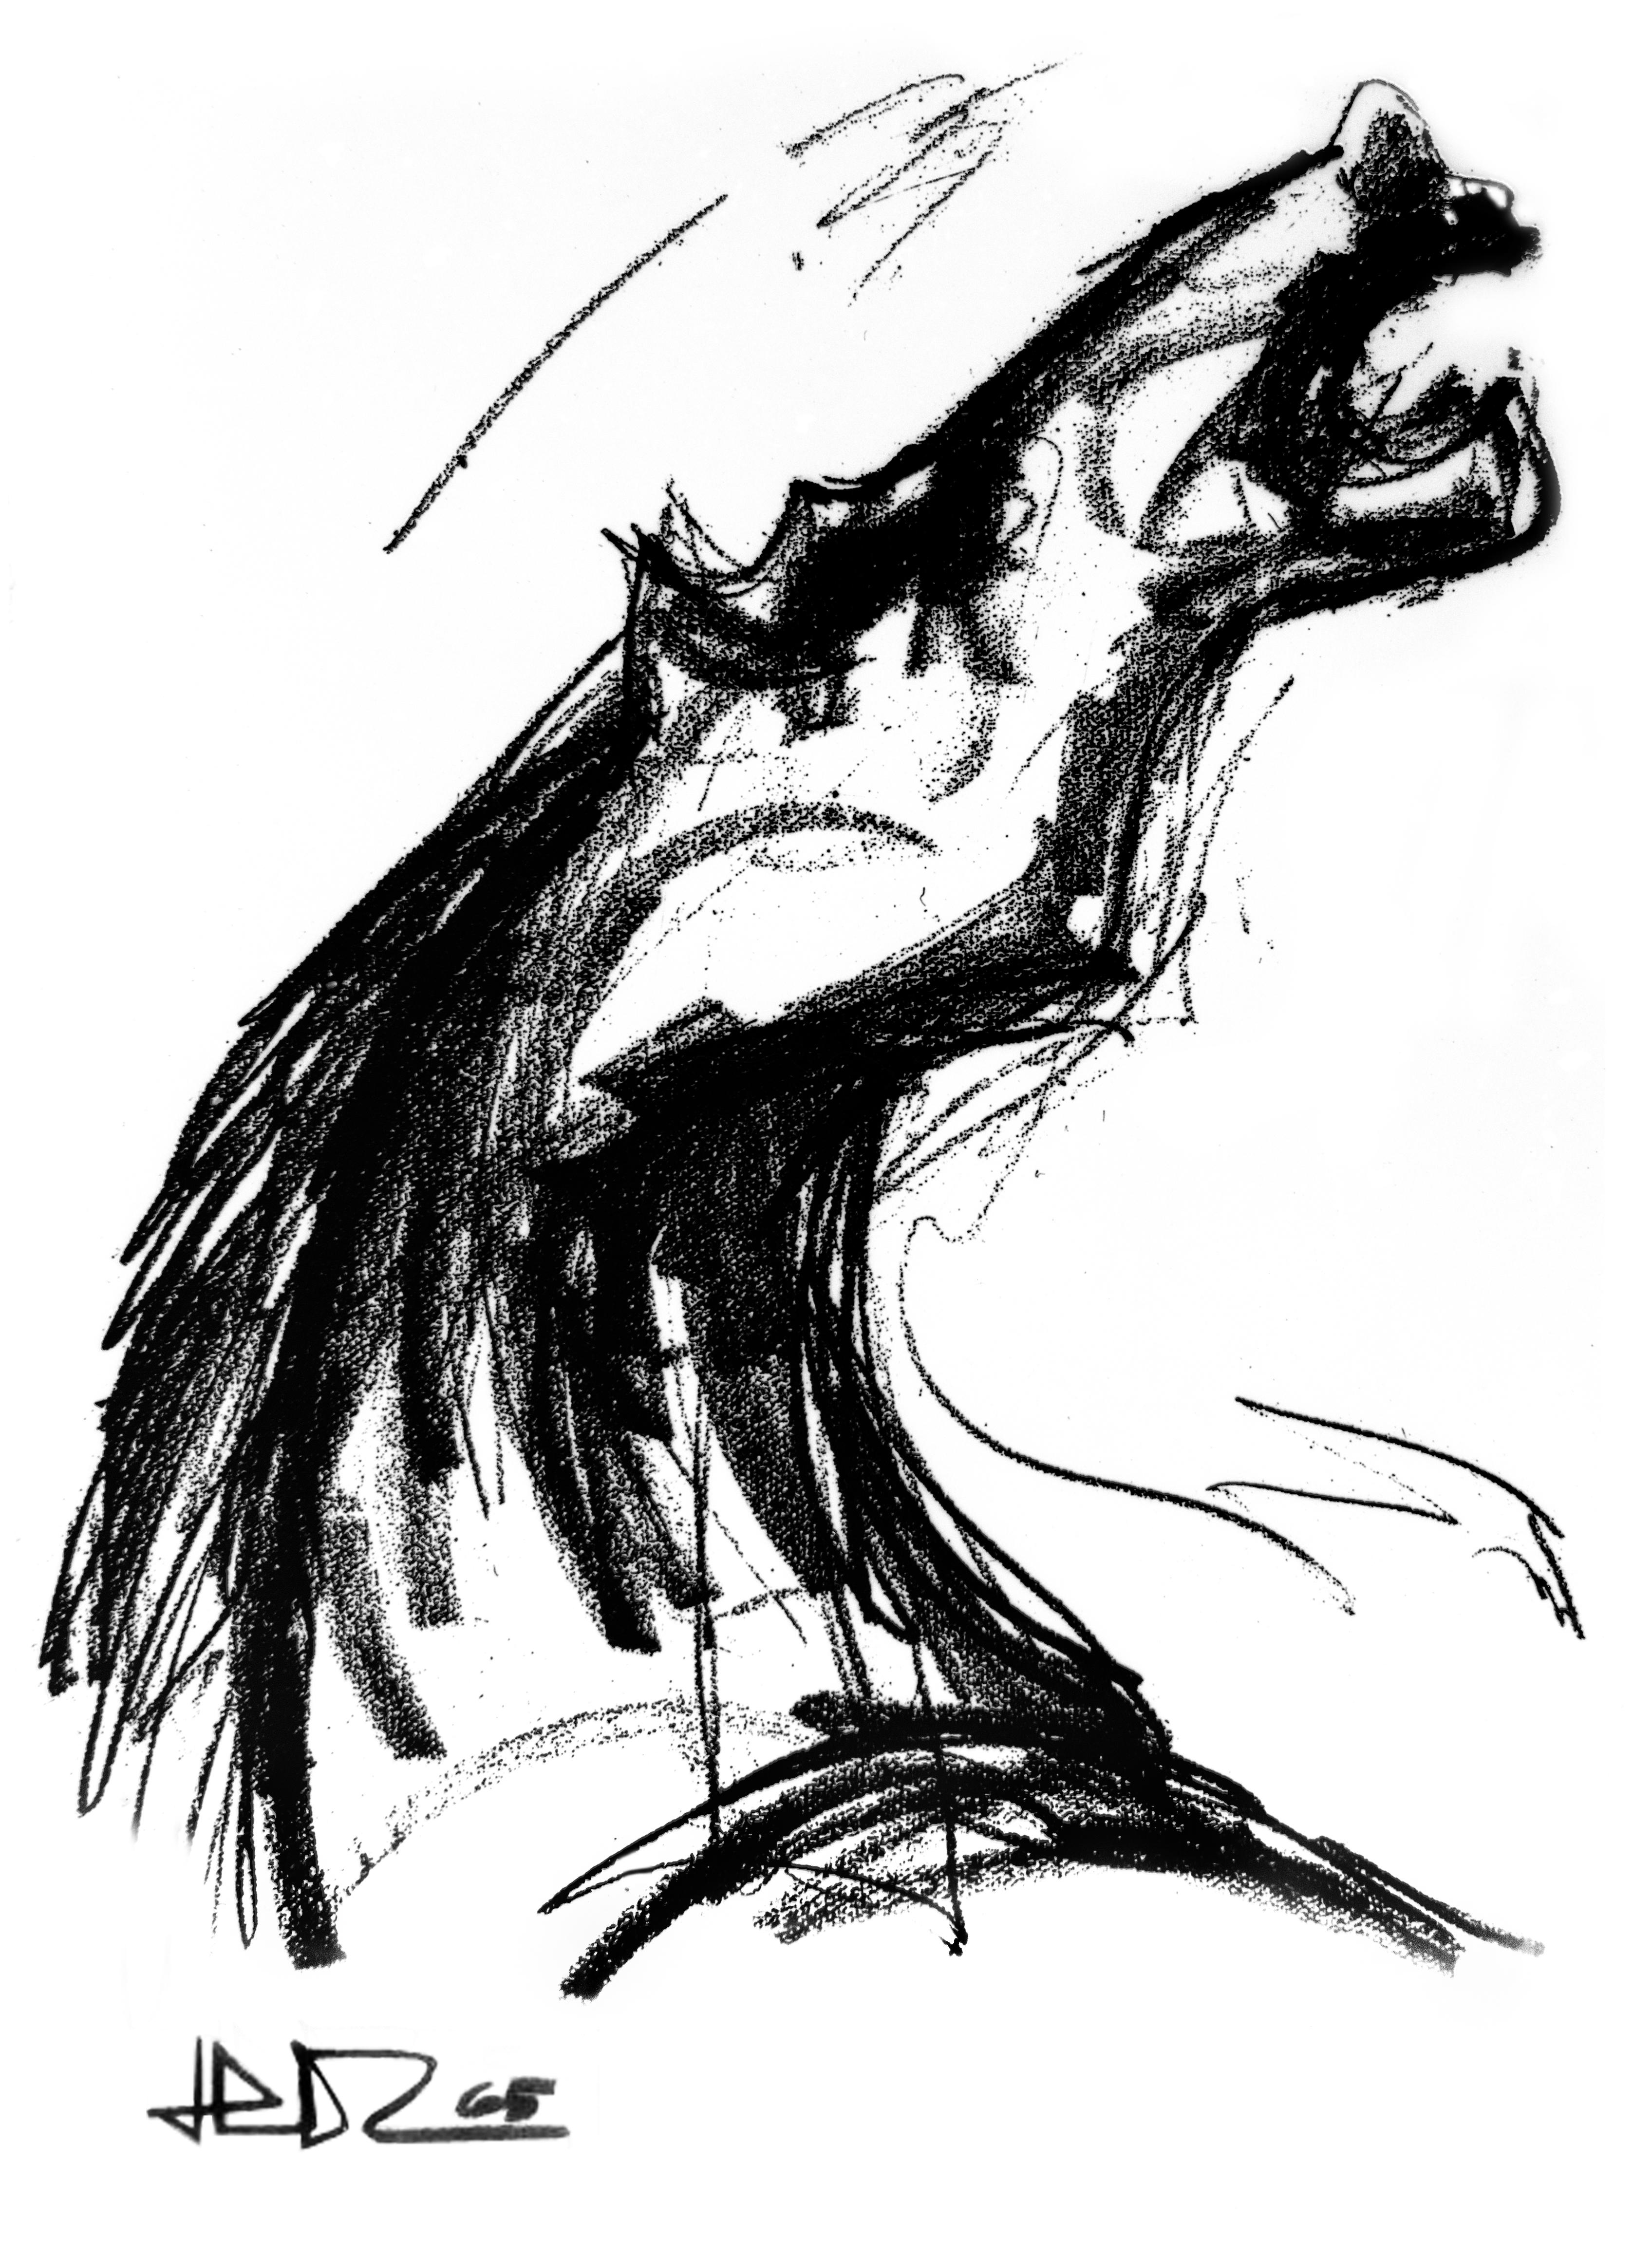 Juan José Díaz Infante Print - "Horse called wind" - Horizontal black and white horse giclee.